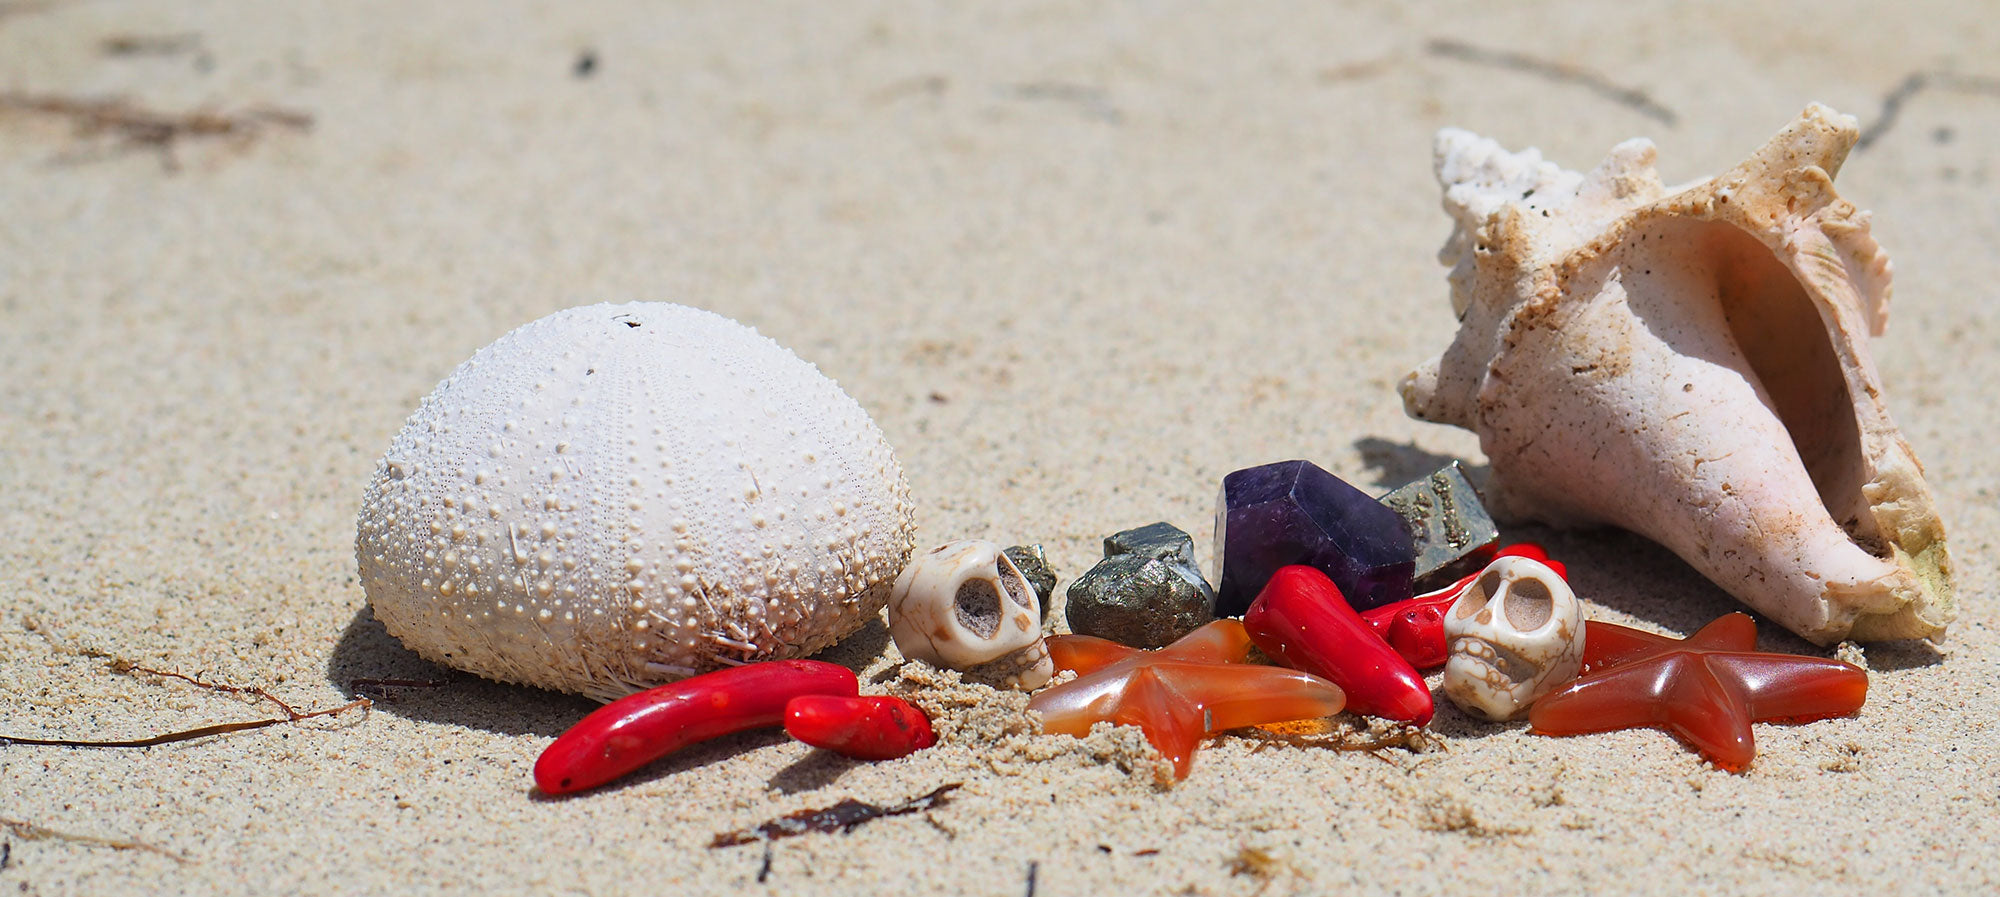 surlestoitsdeparis - nature morte - plage